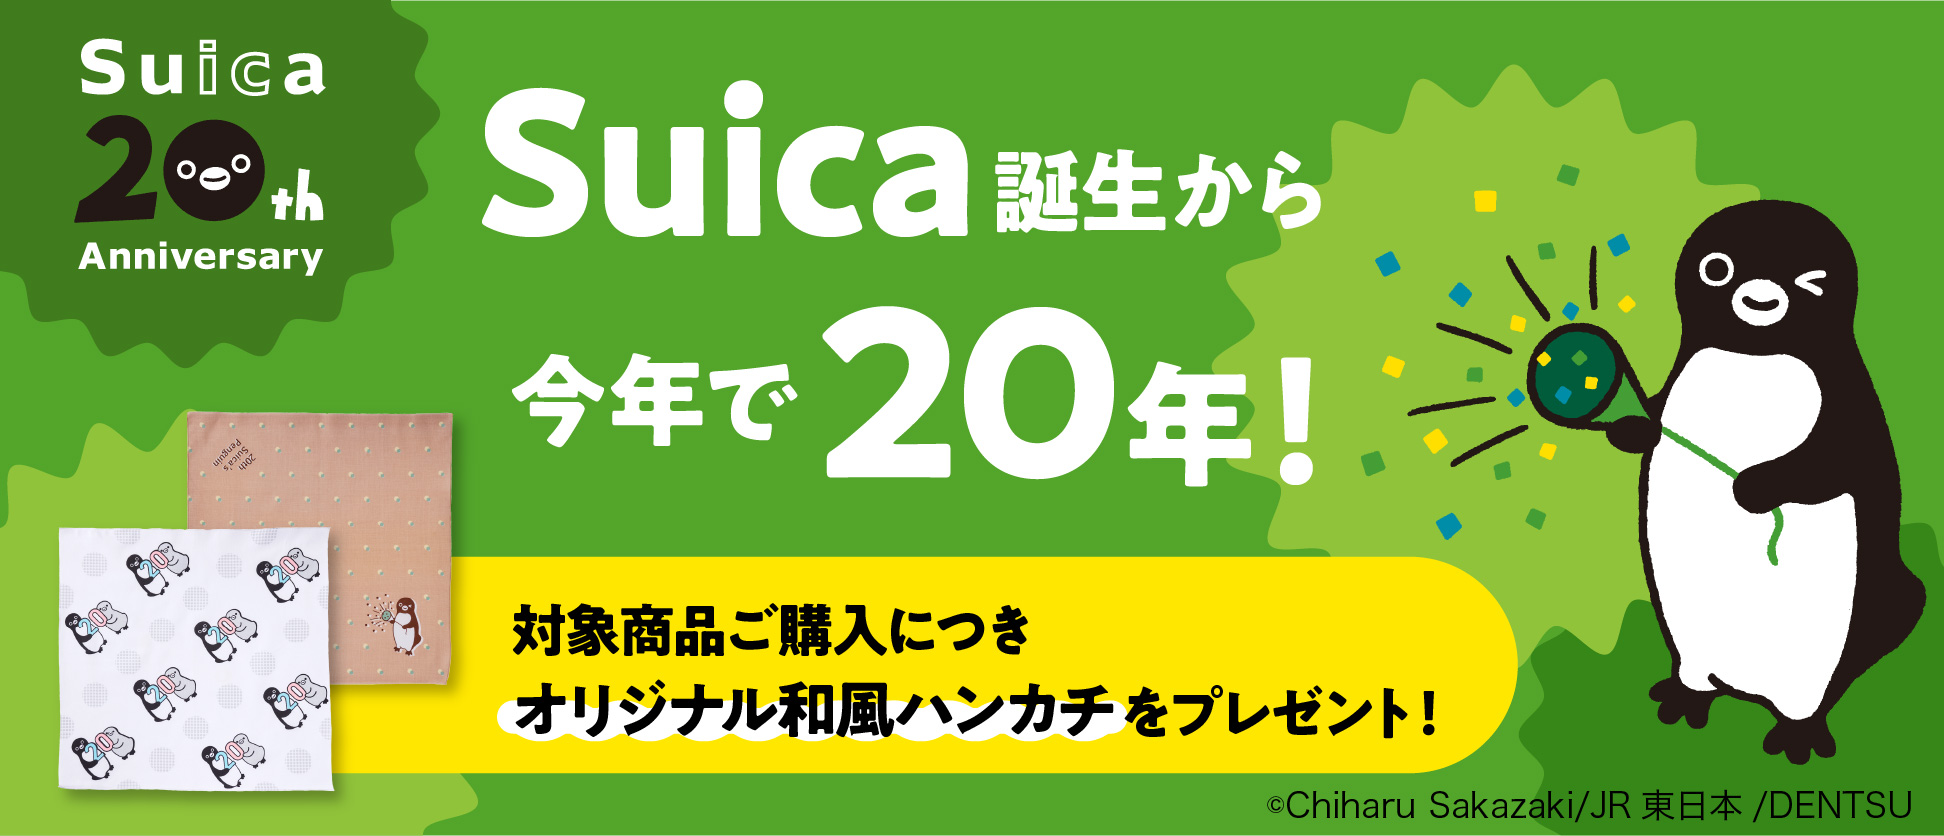 Suica 20th Anniversary Suica誕生から今年で20年！対象商品ご購入につきオリジナル和風ハンカチをプレゼント!